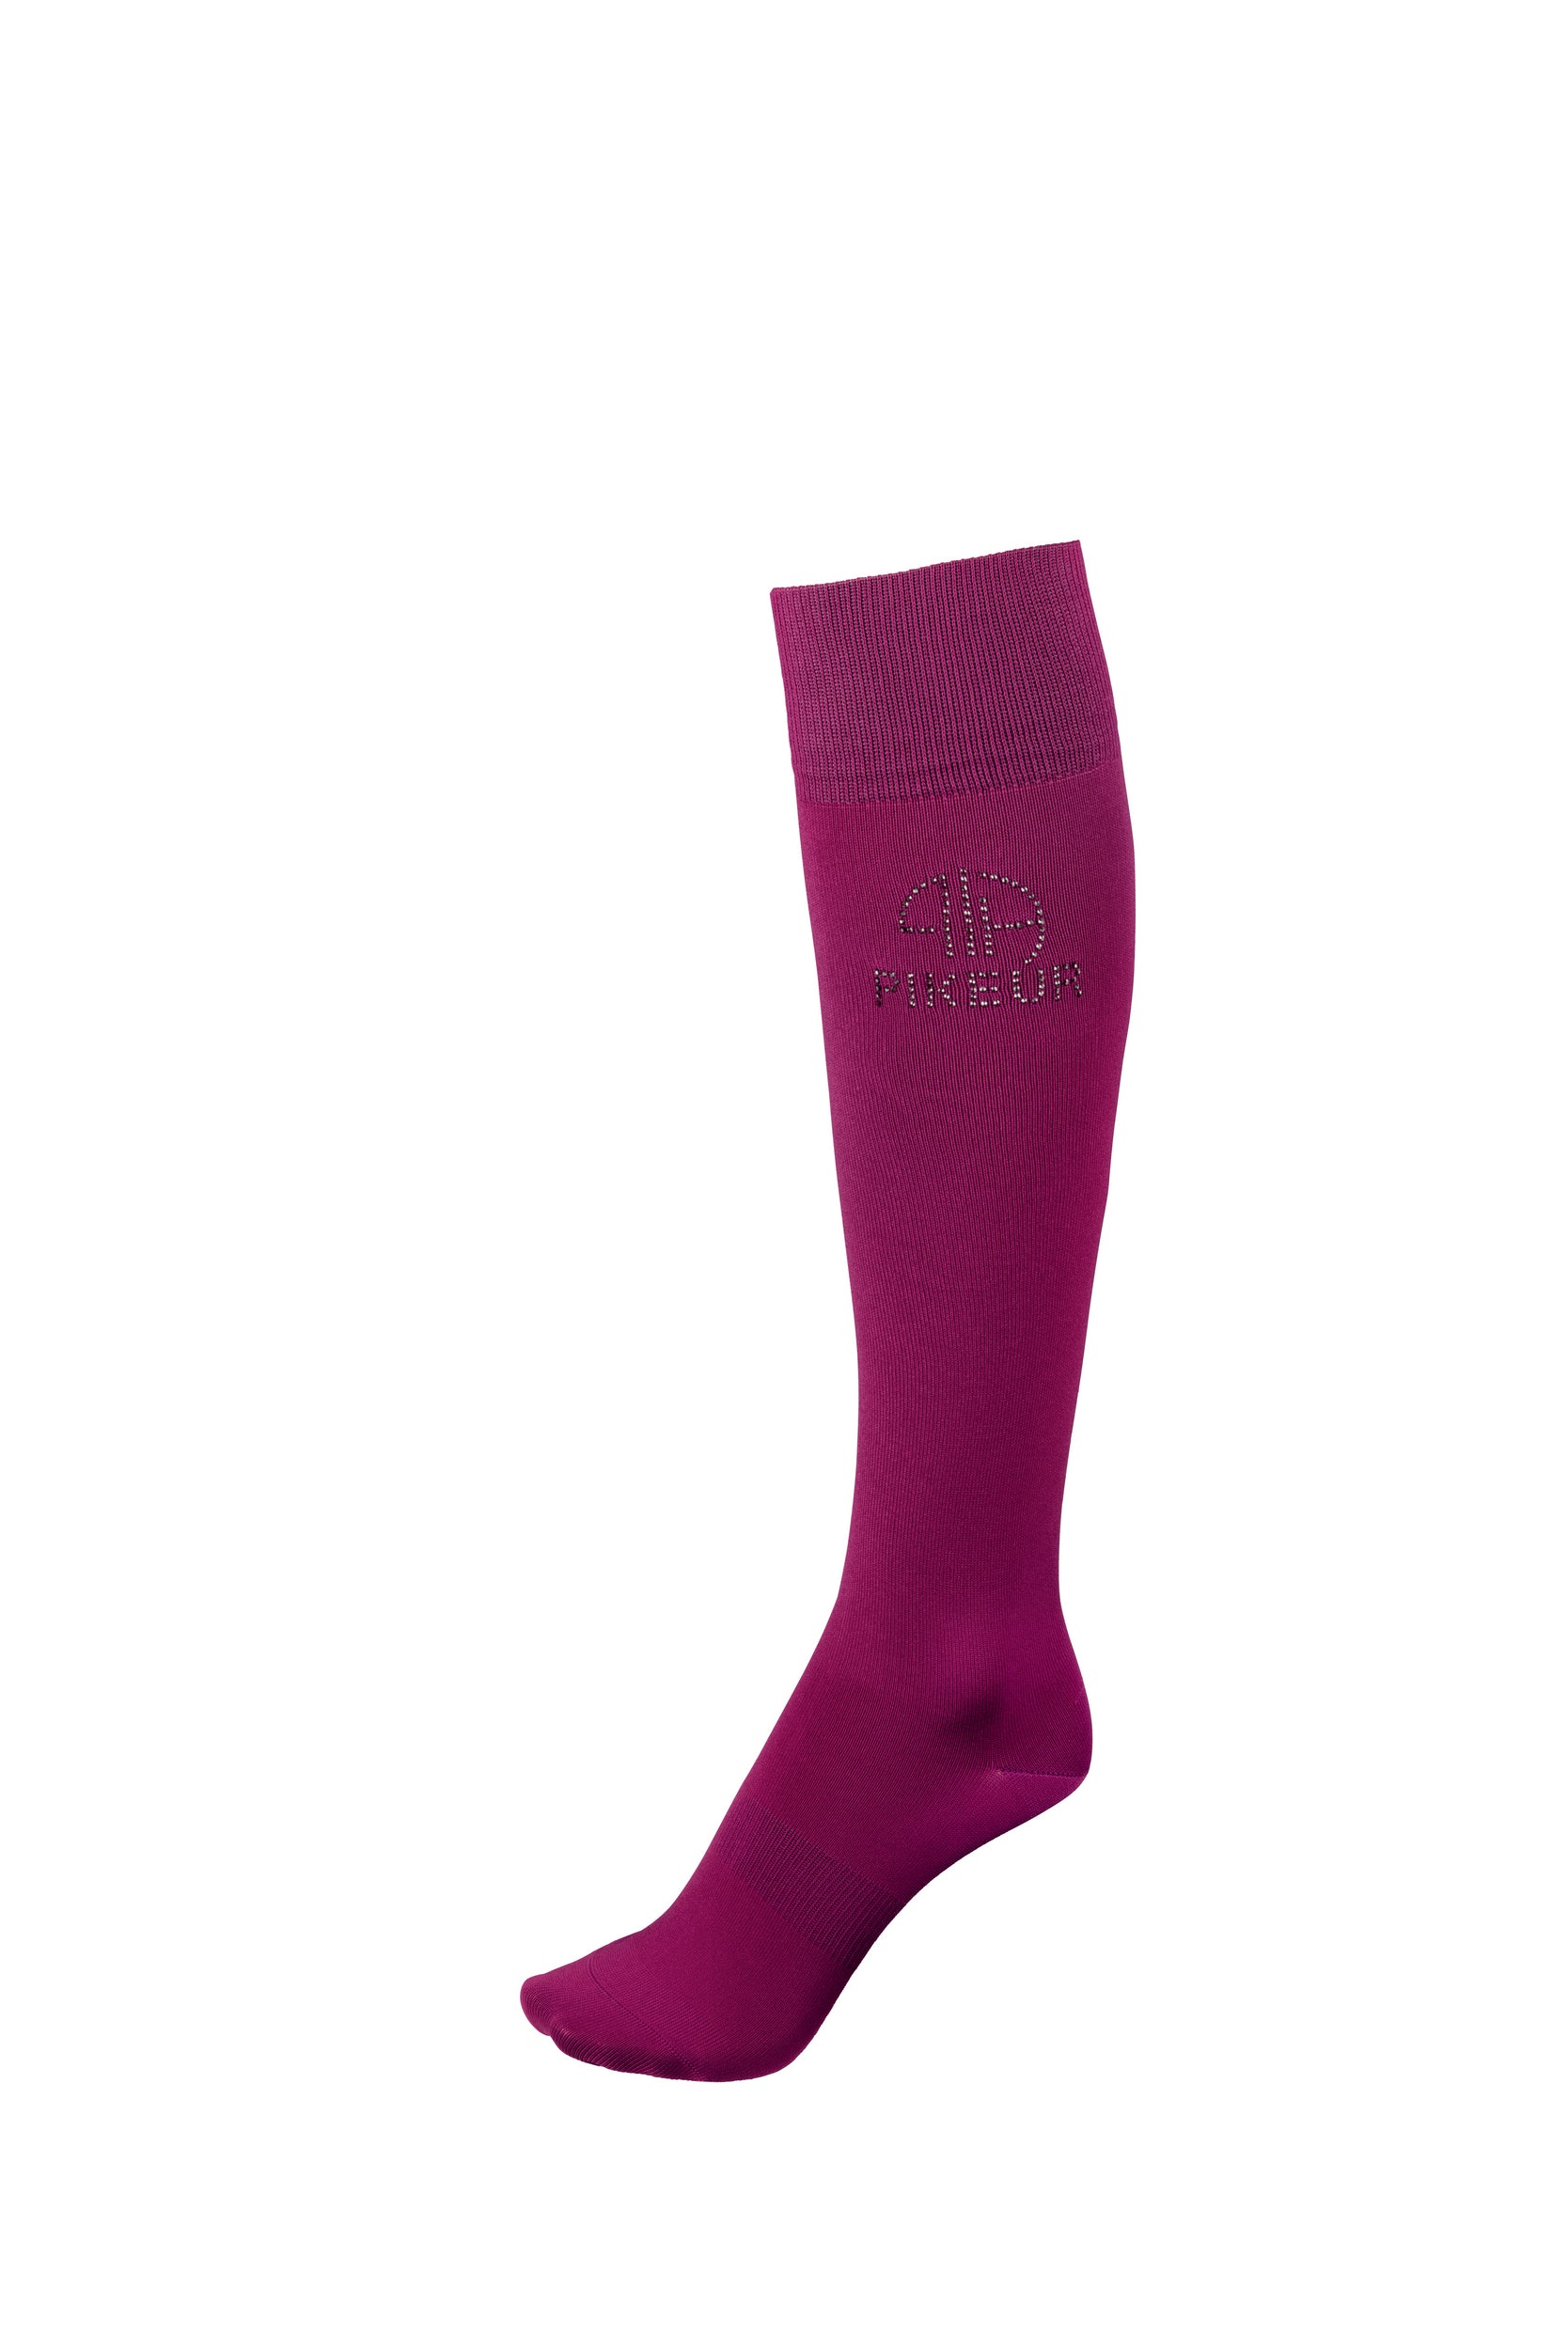 Pikeur hot pink strass knee socks